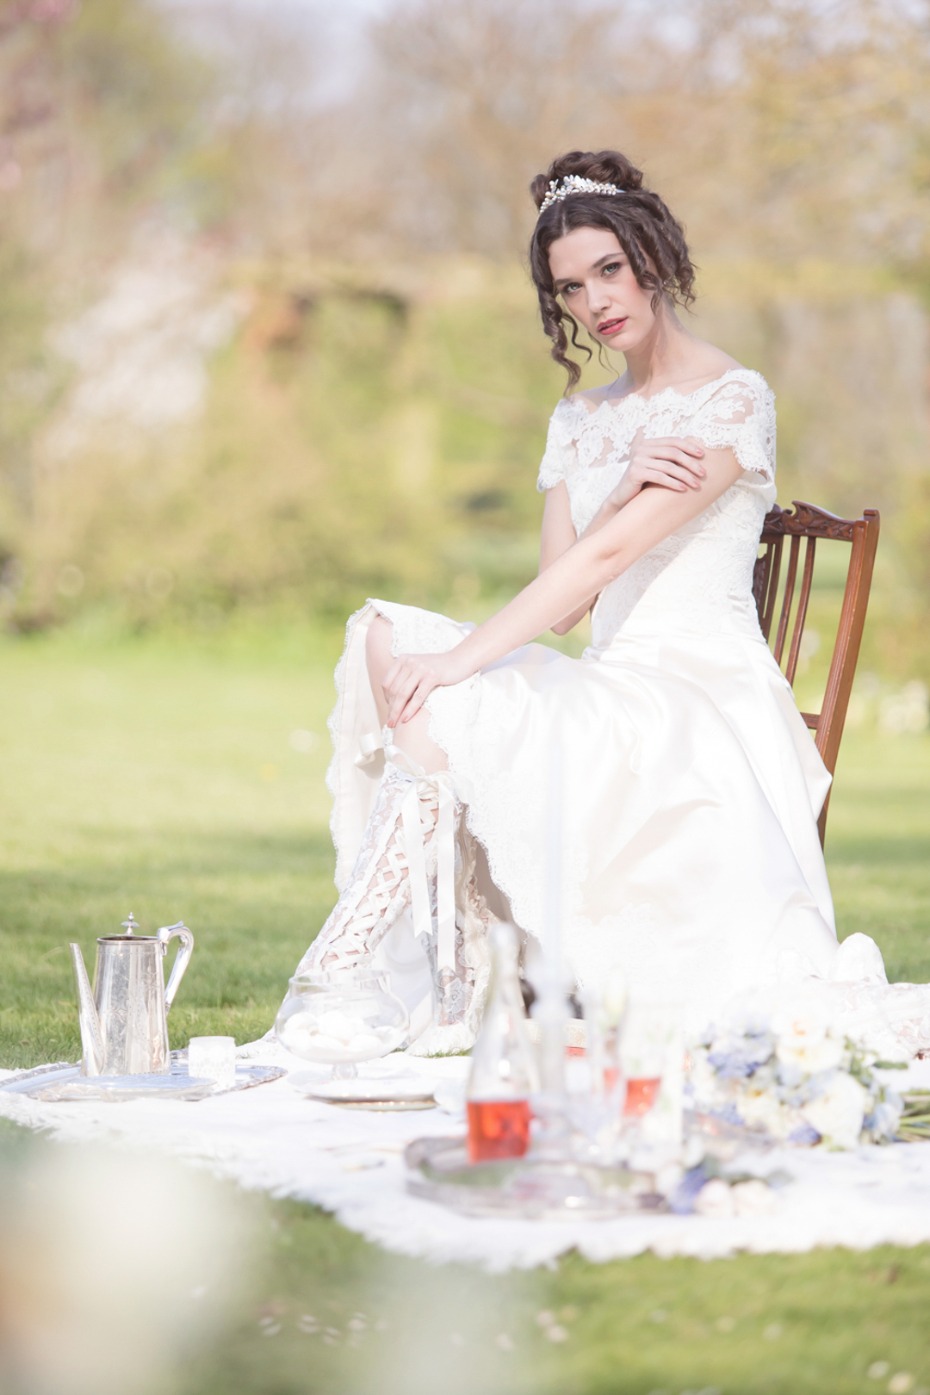 Sense and Sensibility inspired bridal look